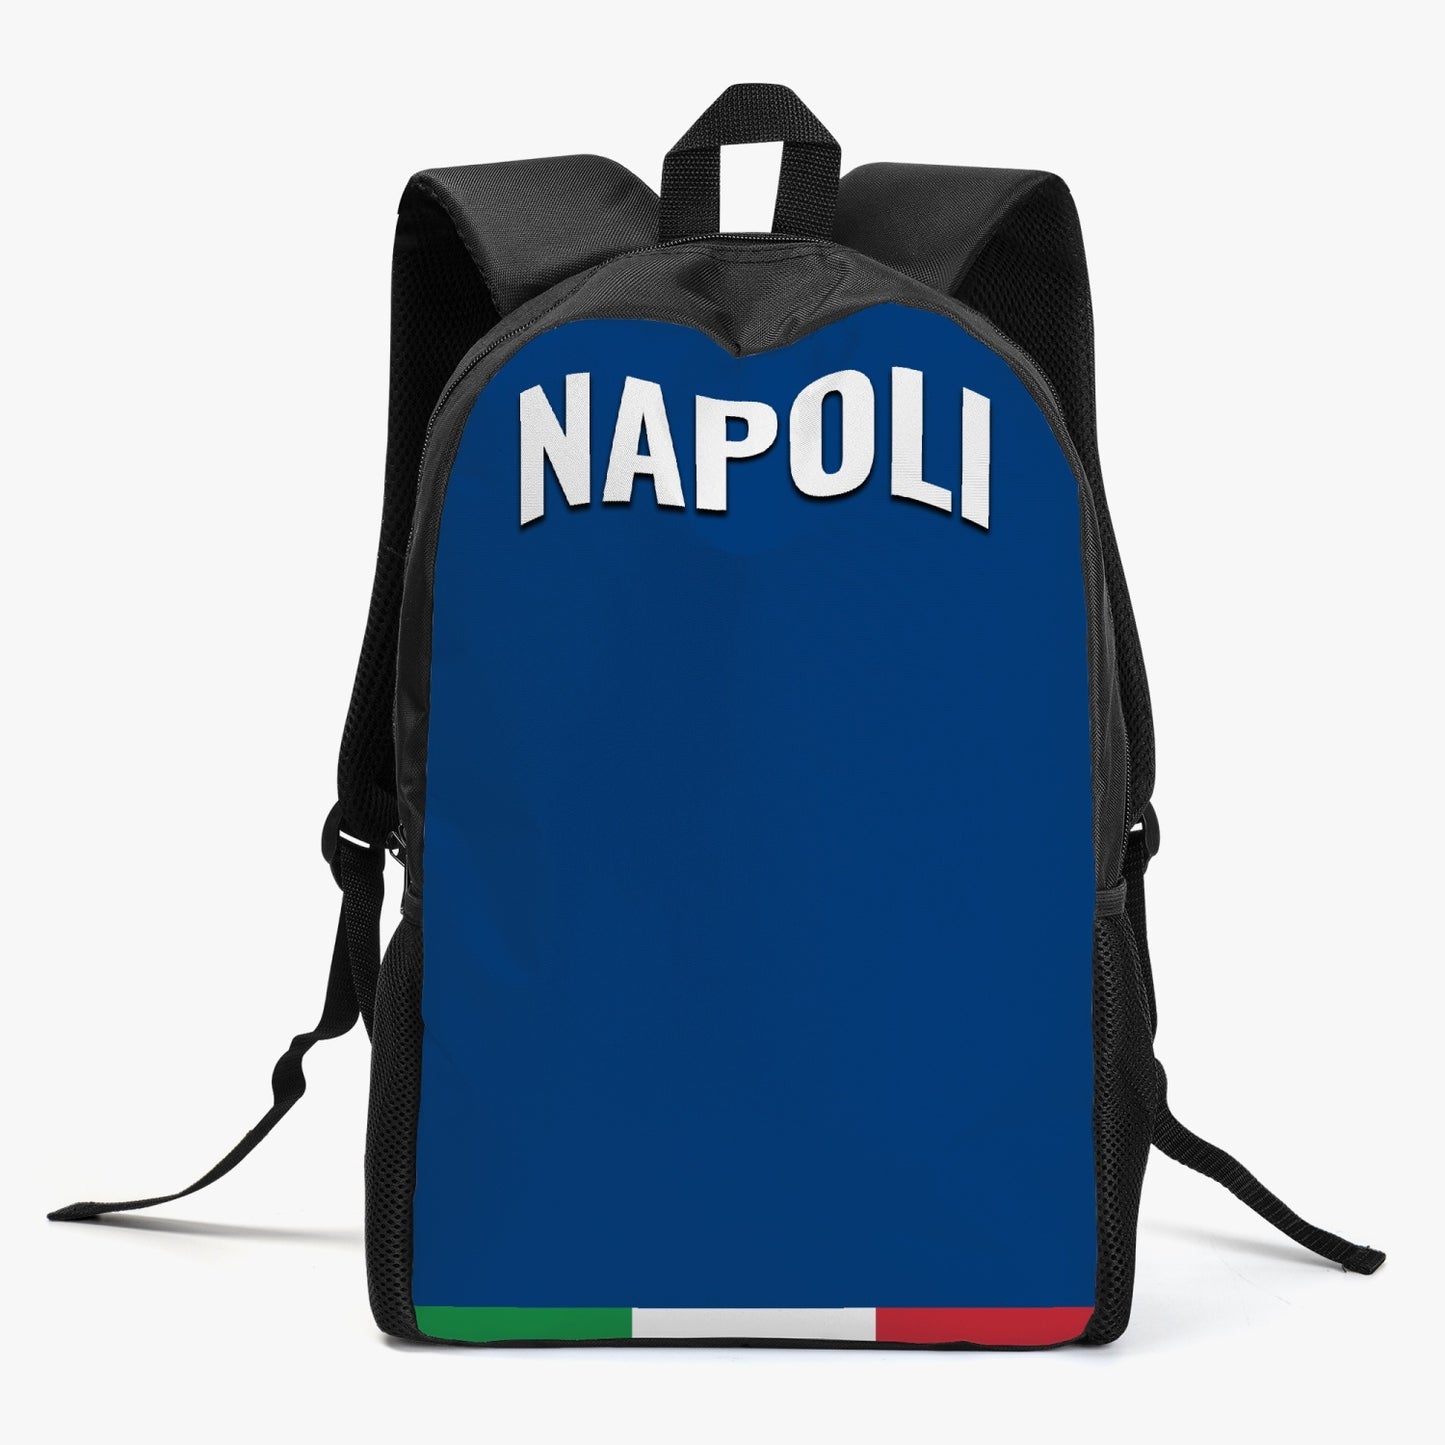 Napoli Kid's School Backpack